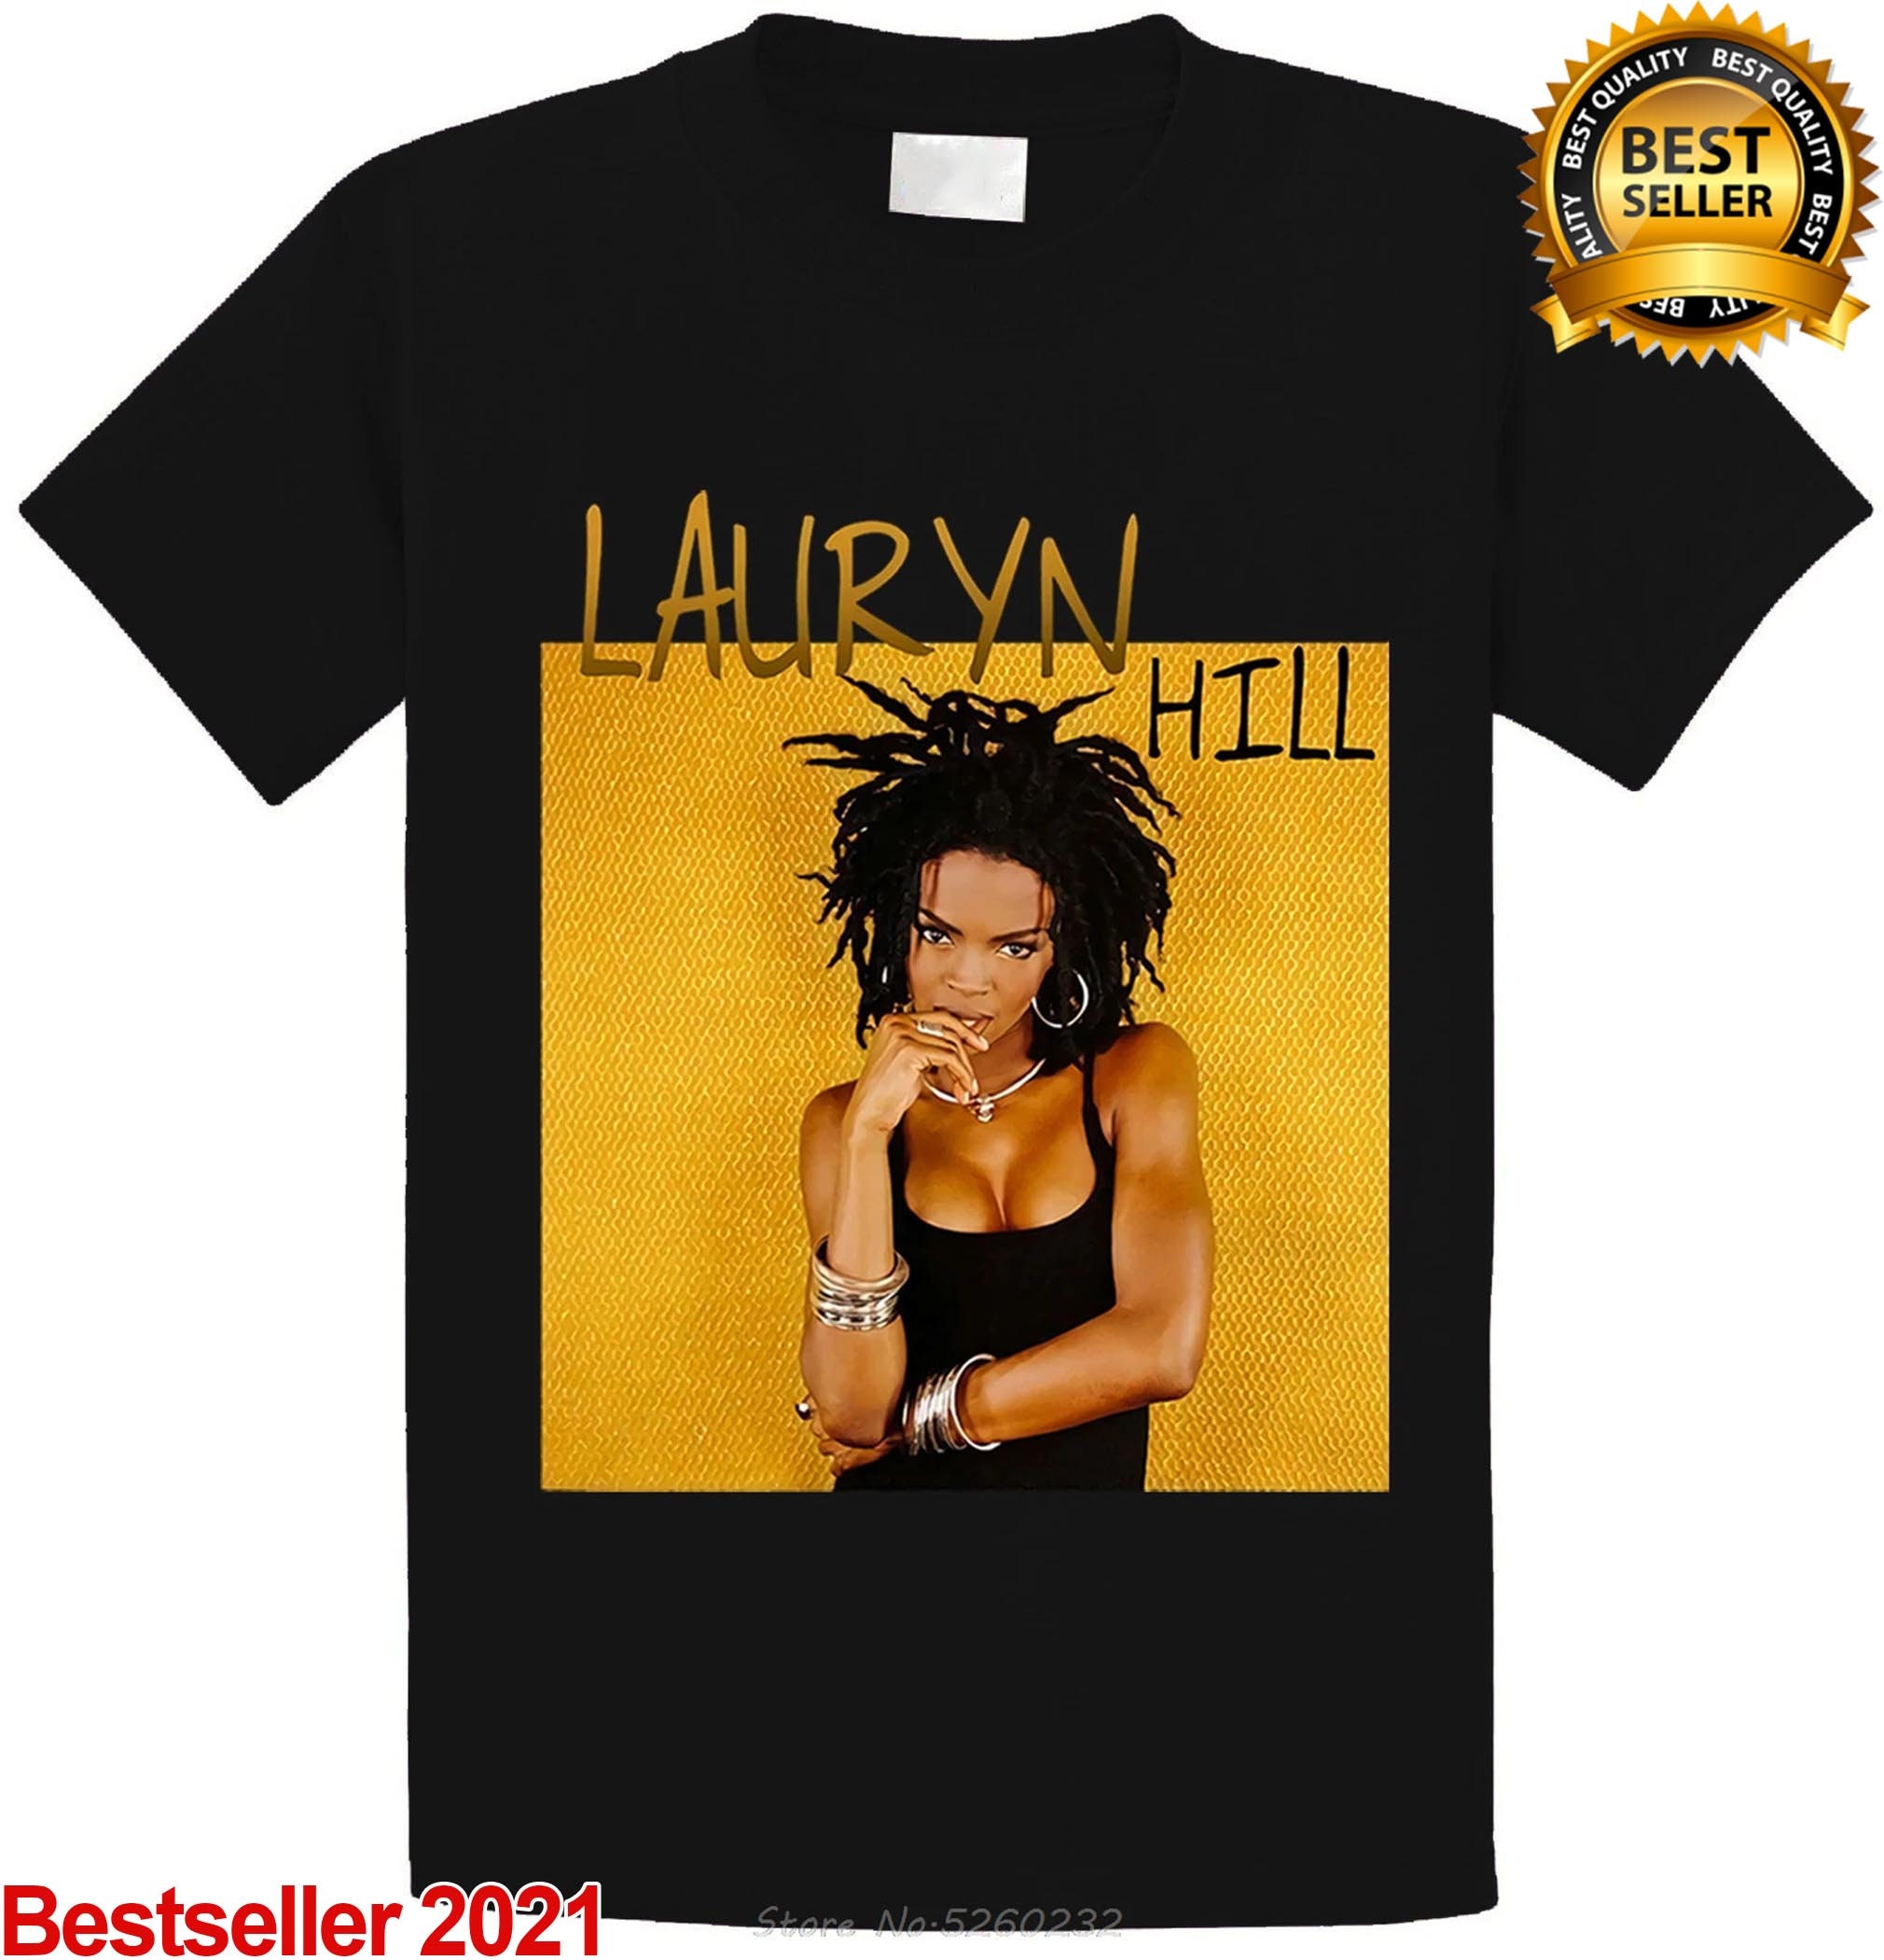 Lauryn Hill Retro Art Shirt Rapper Tee Vintage Shirt Unisex | Etsy